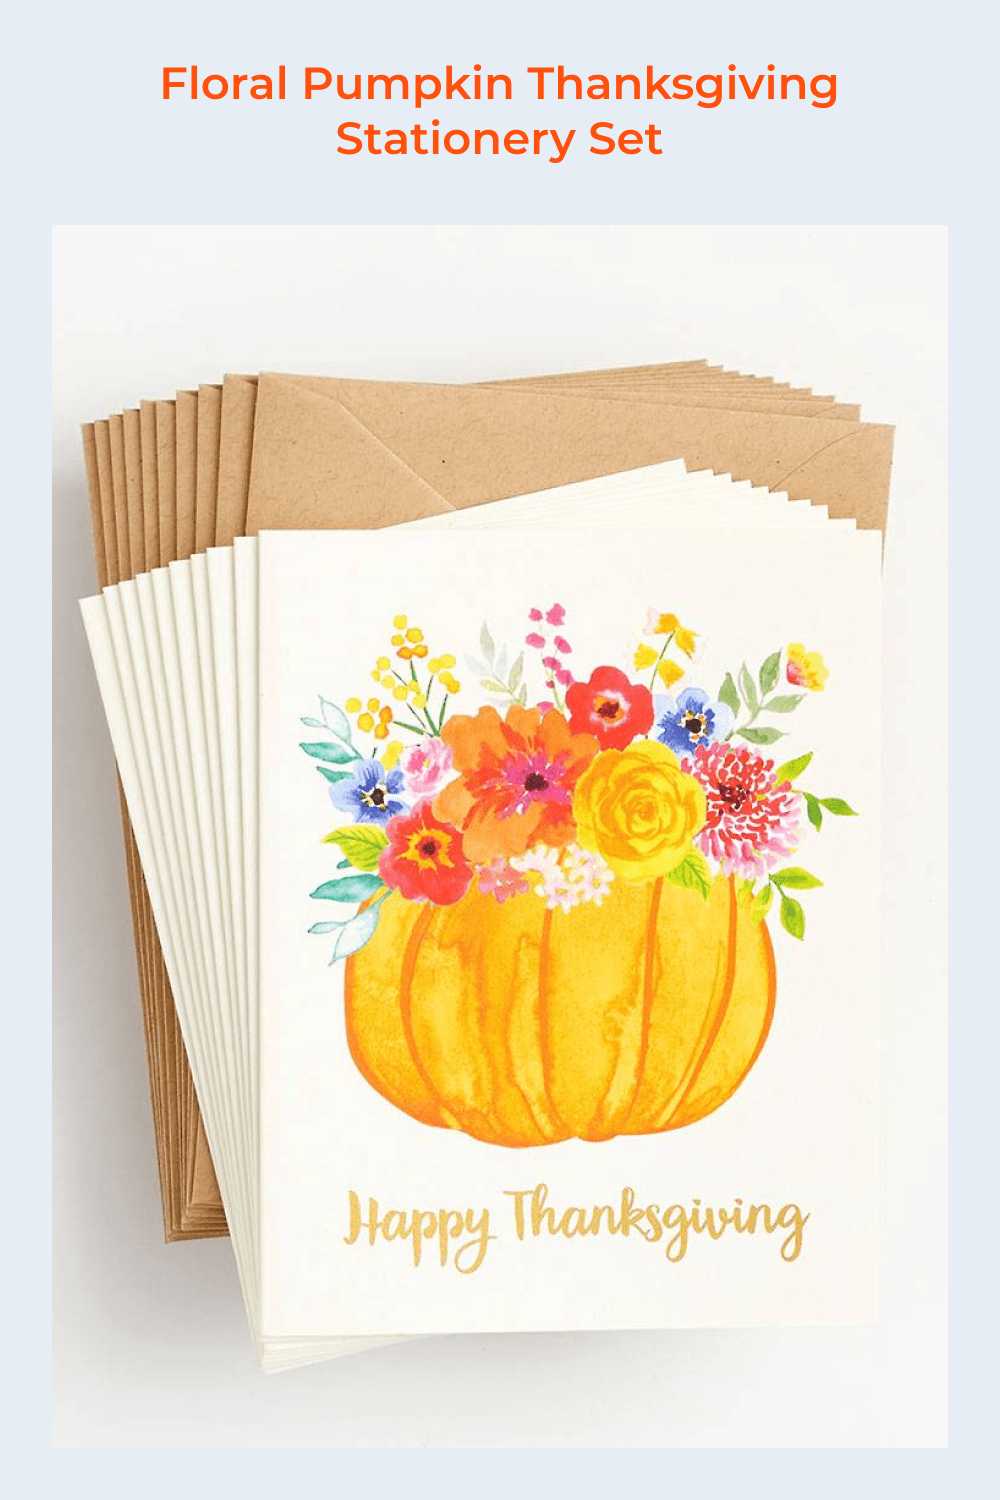 Floral pumpkin thanksgiving stationery set.